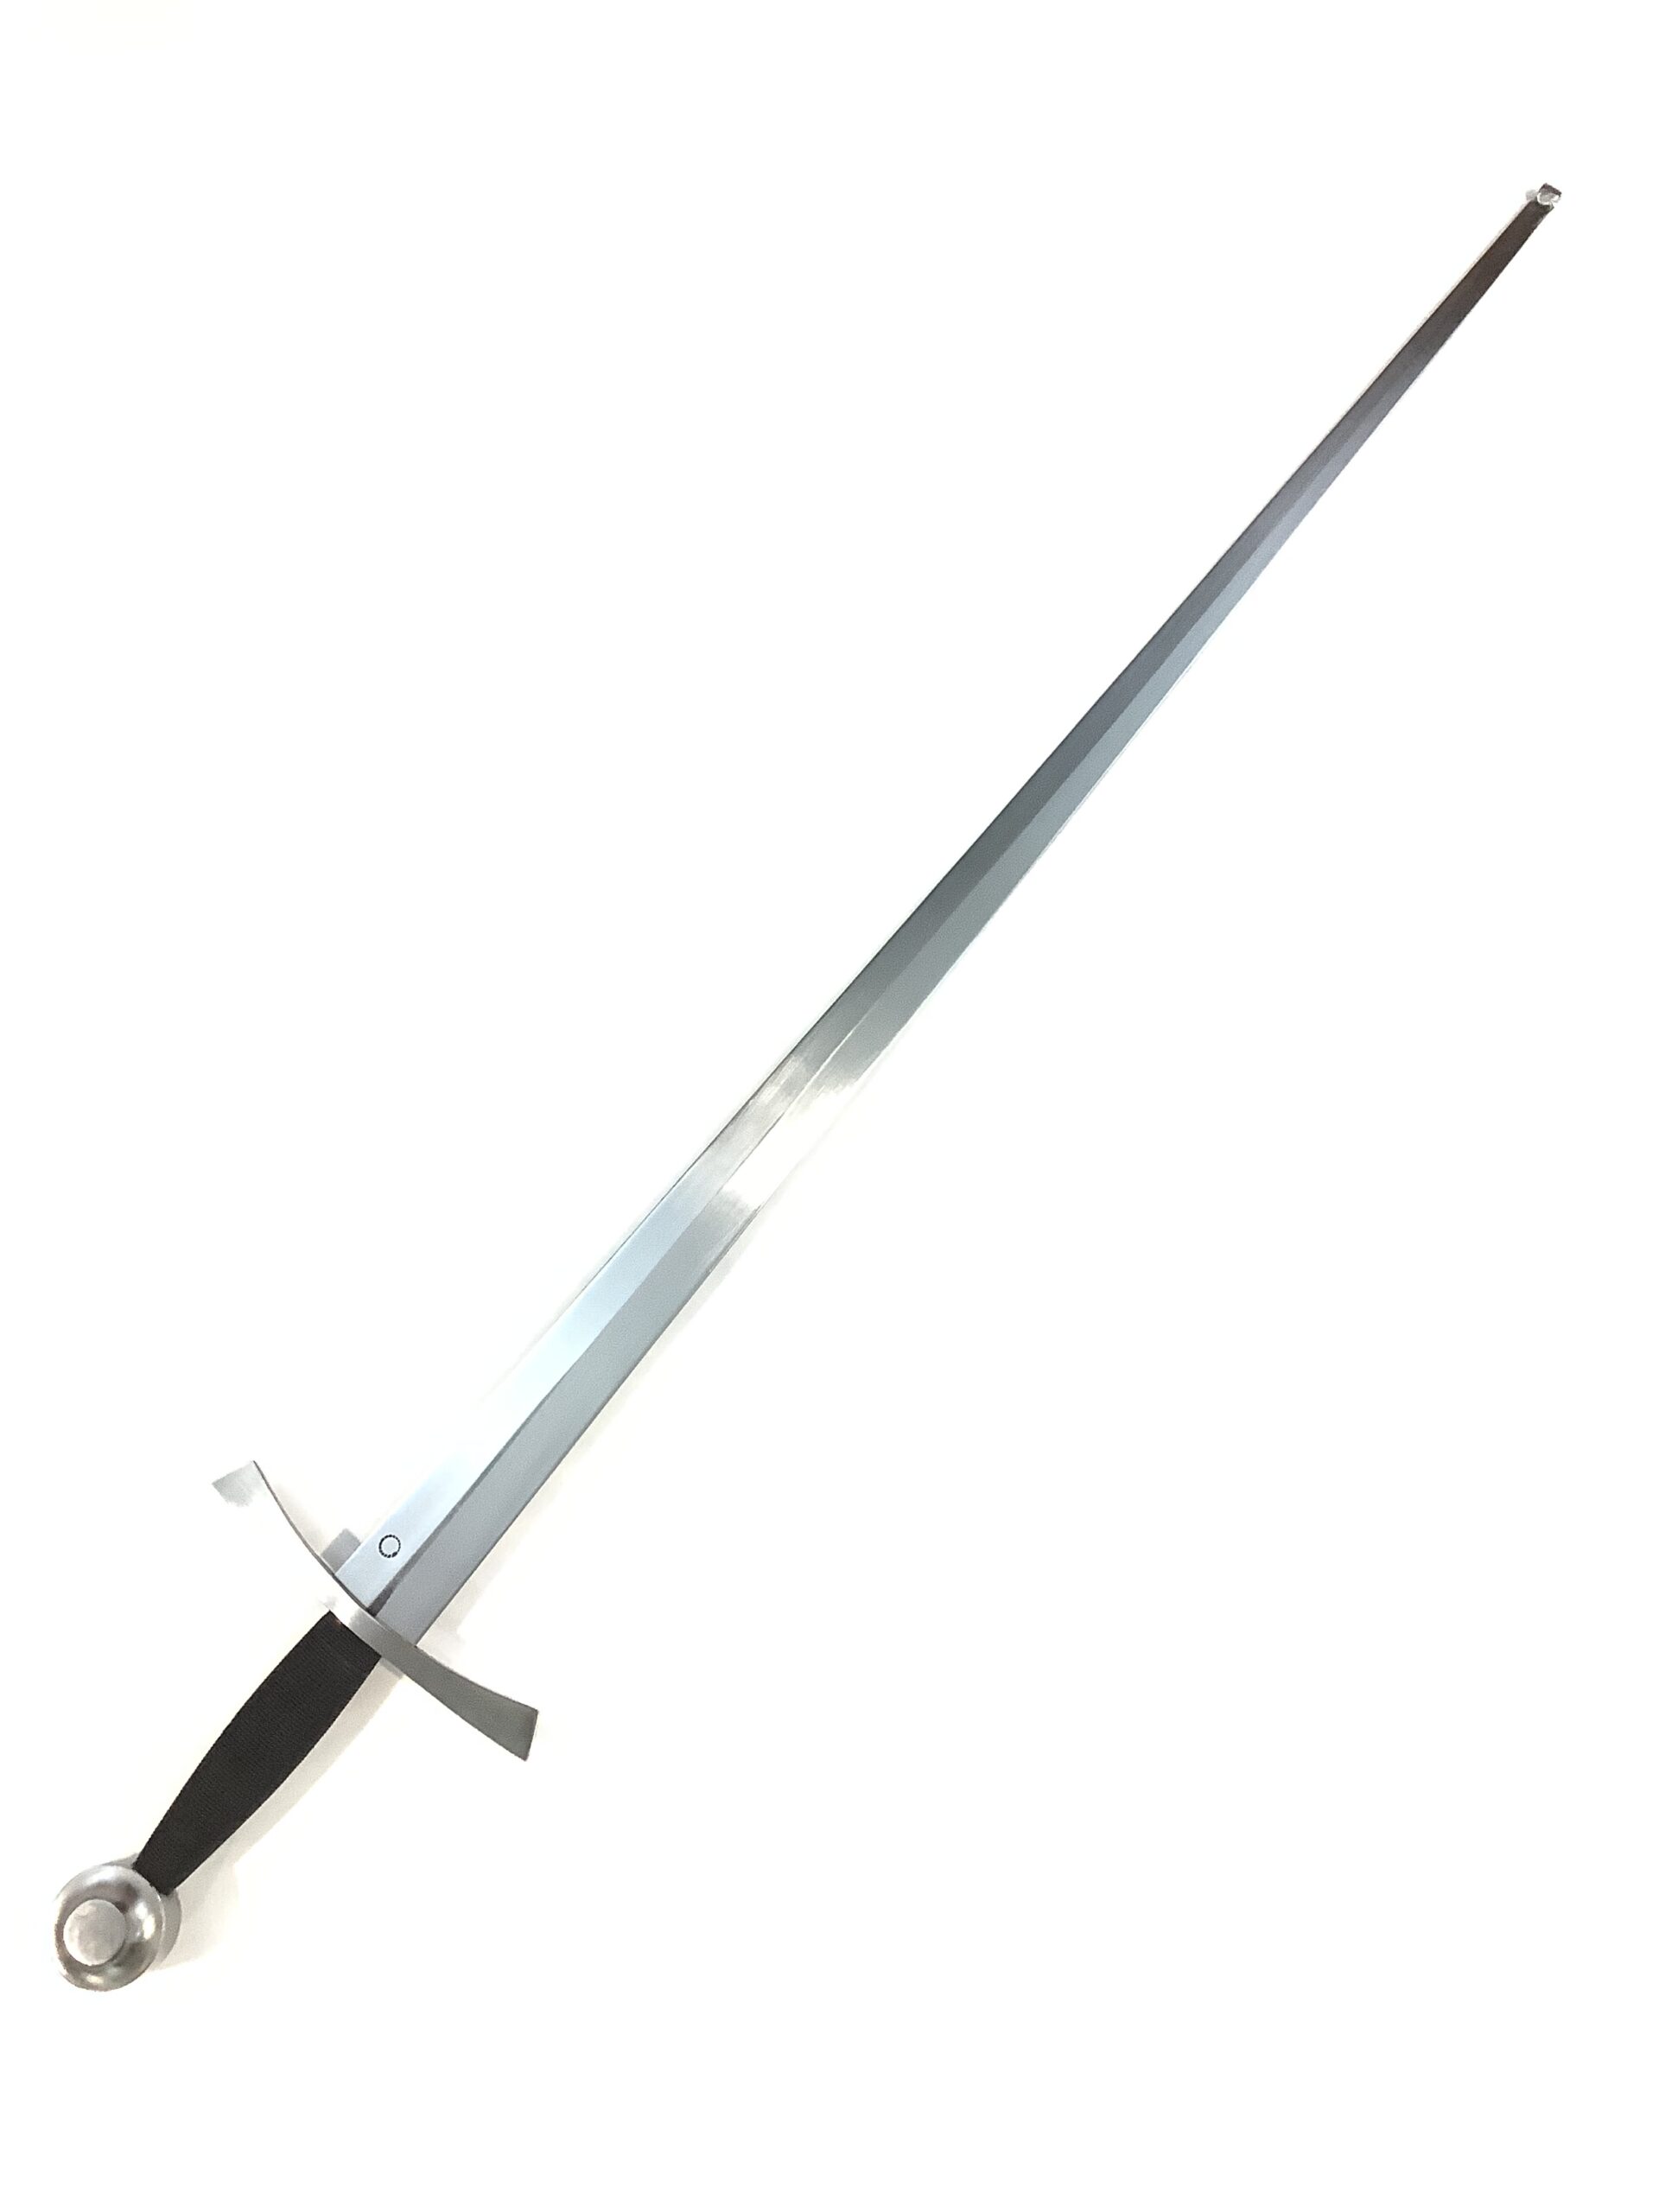 RA I.33 2 Arming Sword Black Cord (1)